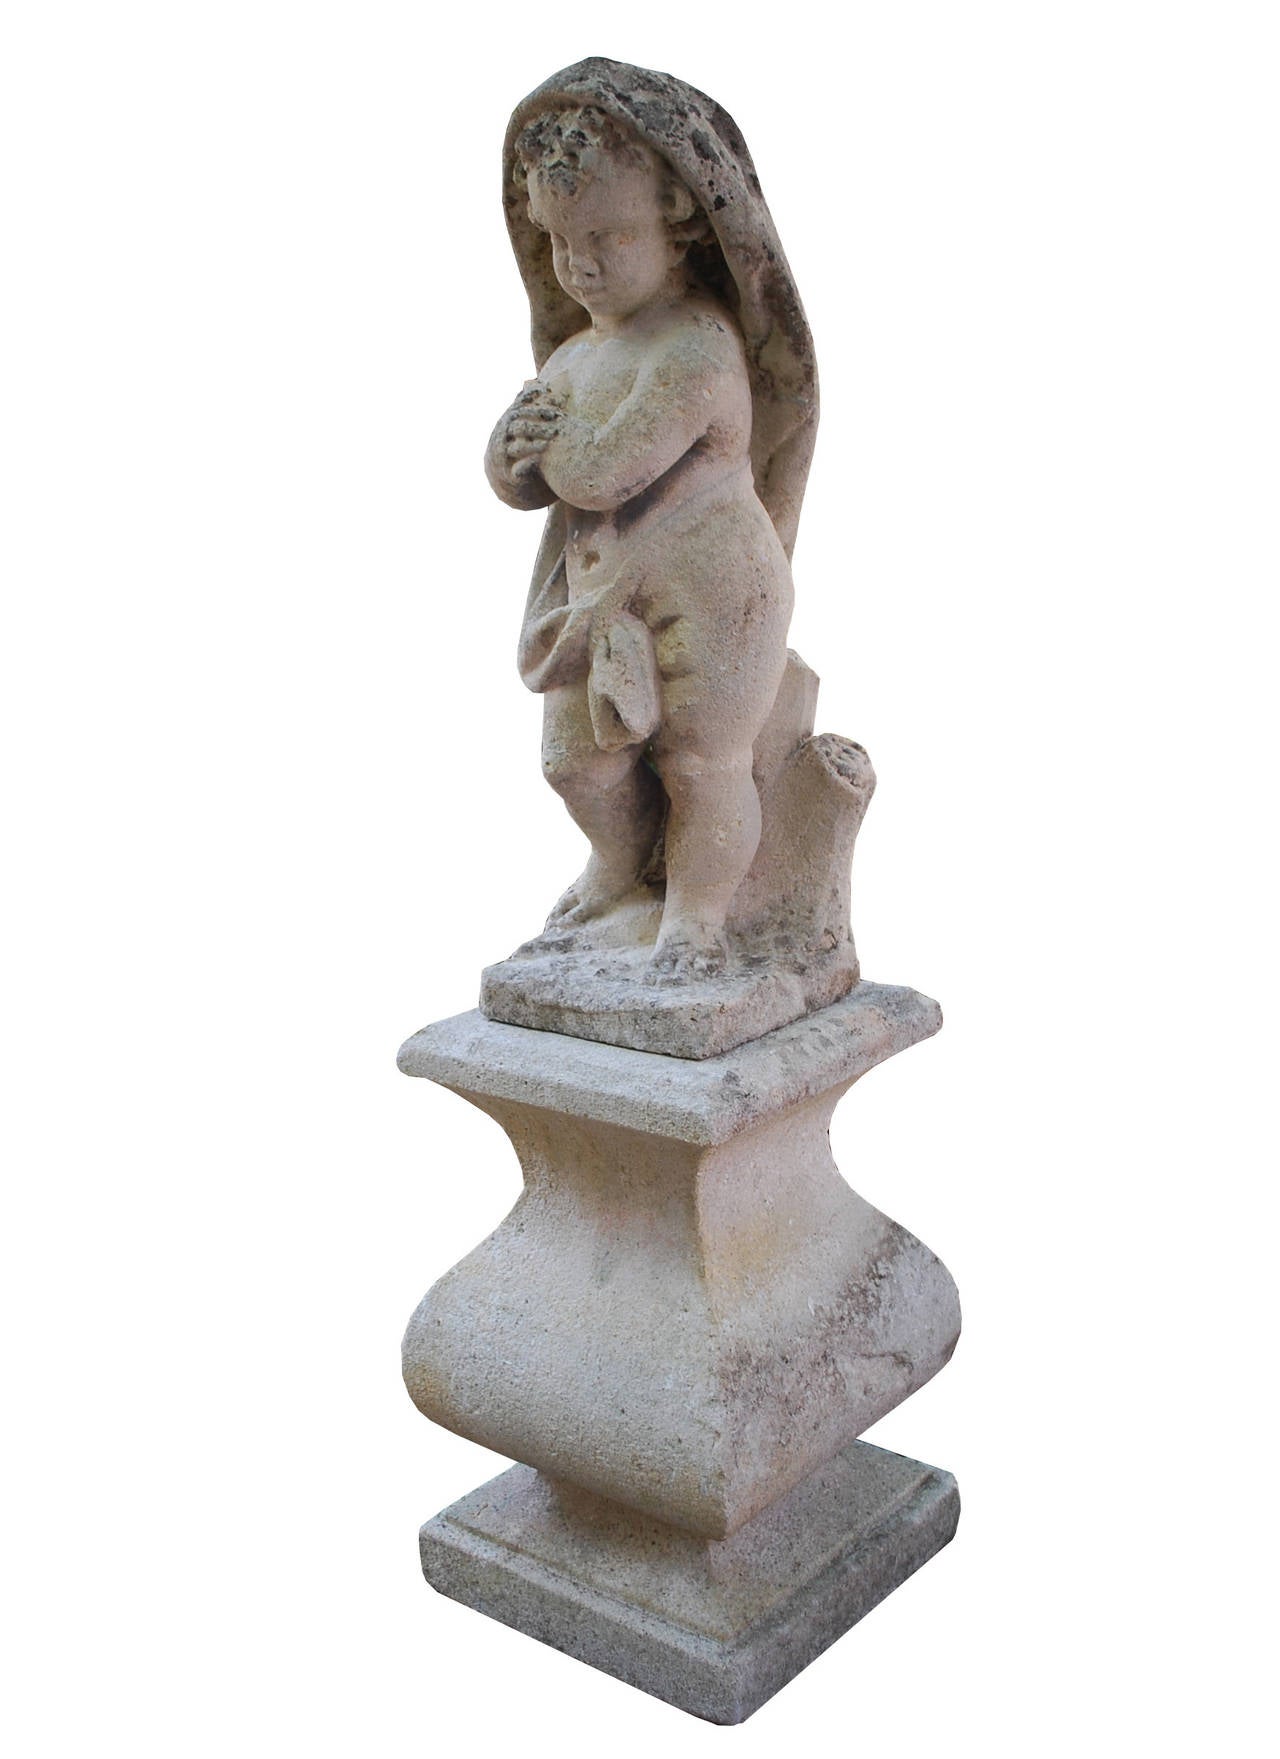 20th century sculpted sandstone putti on pedestal.
Originates Italy, dating, circa 1920.
Price and measurements includes pedestal.
